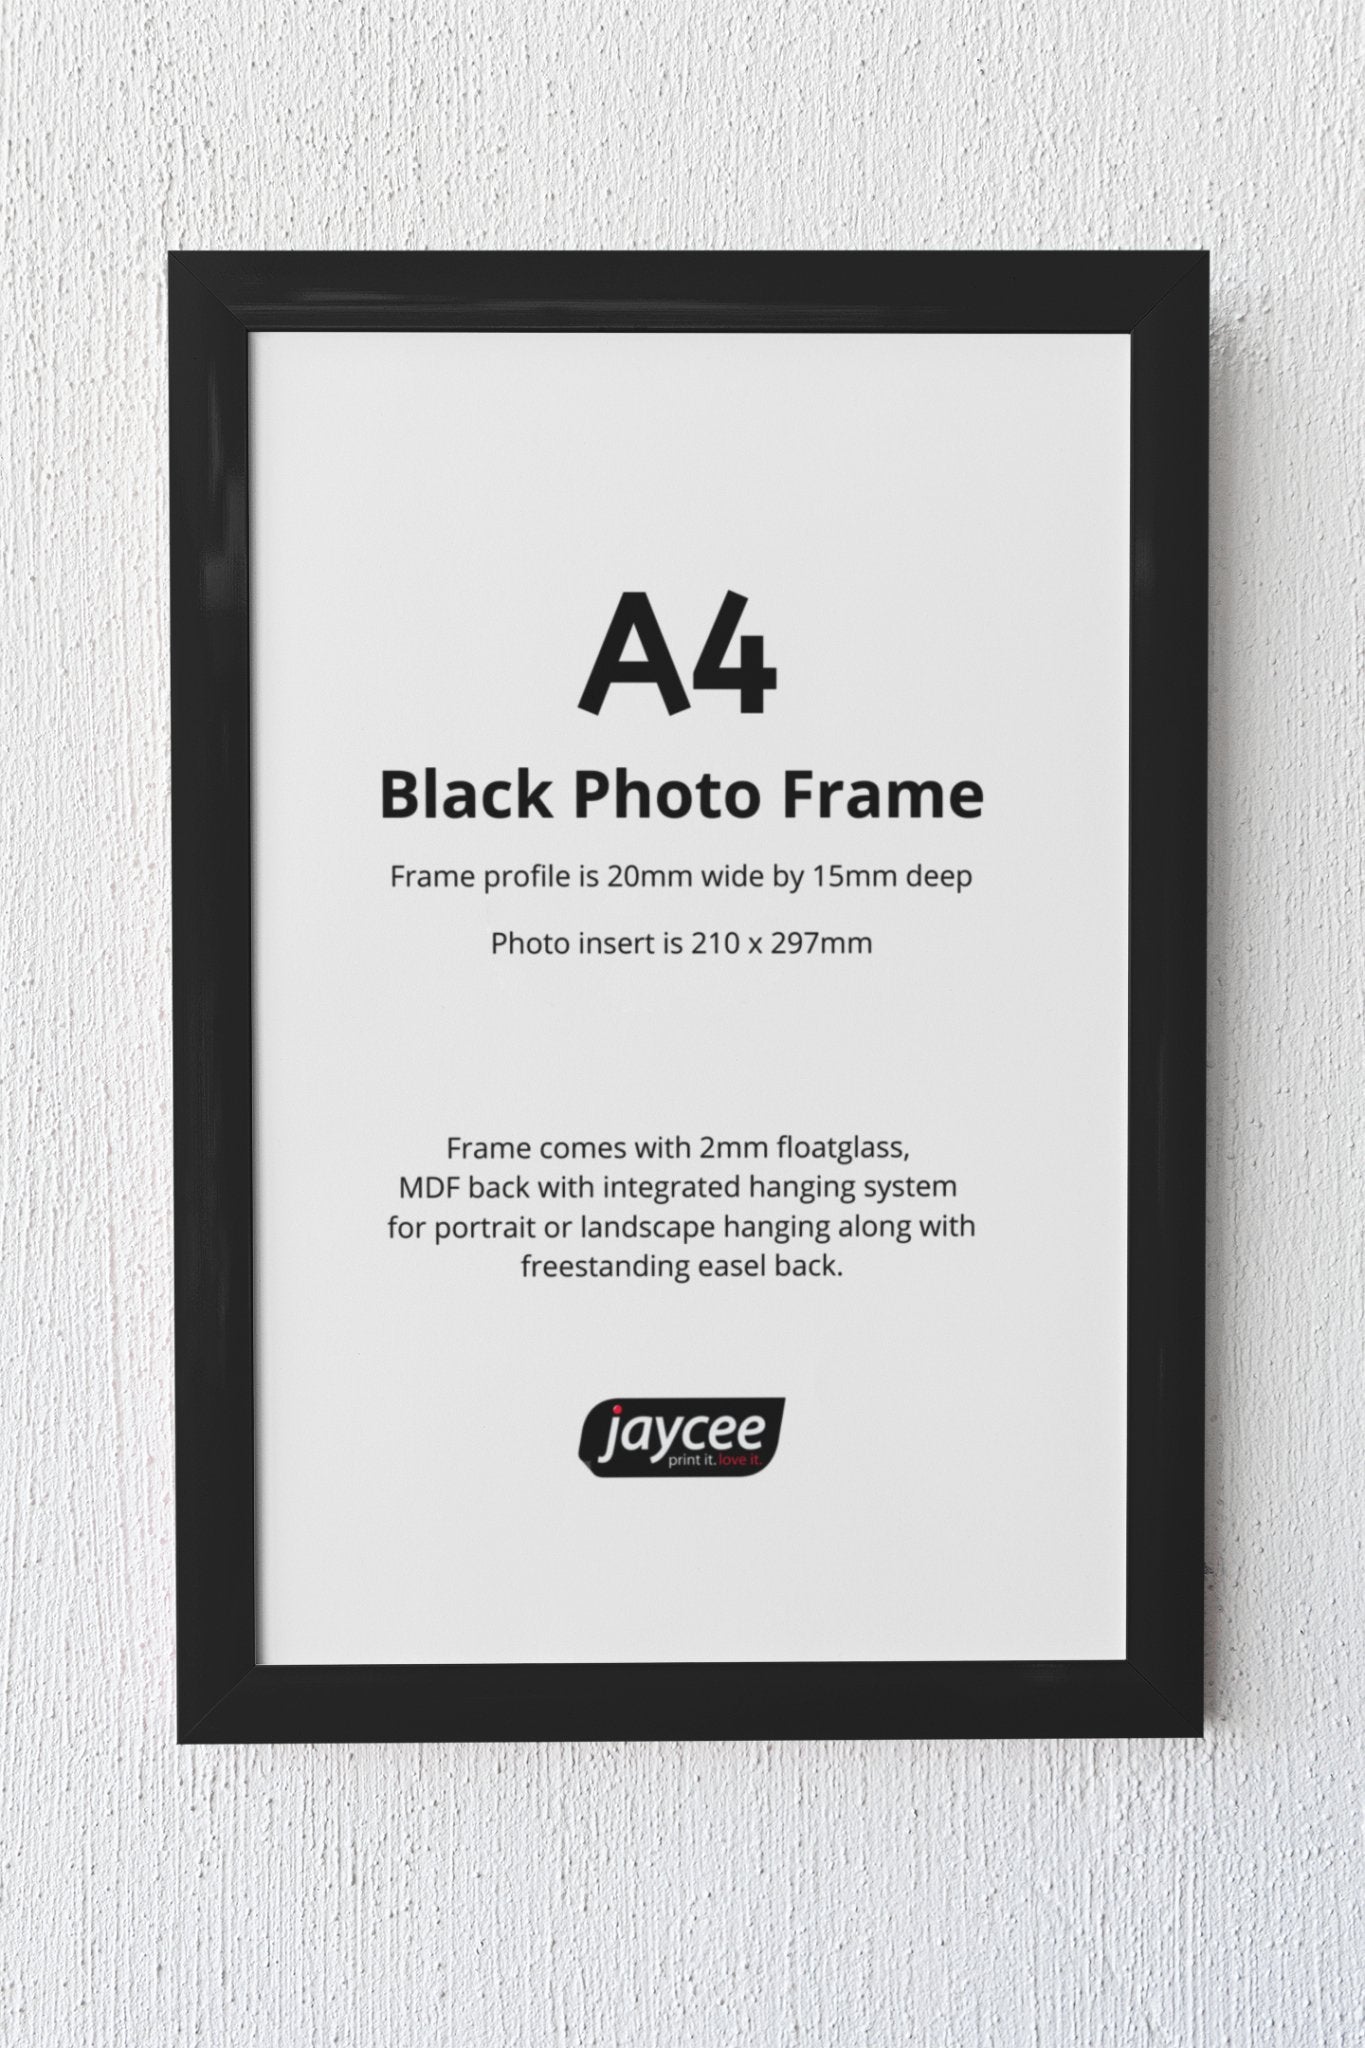 A4 Black Photo Frame - Jaycee